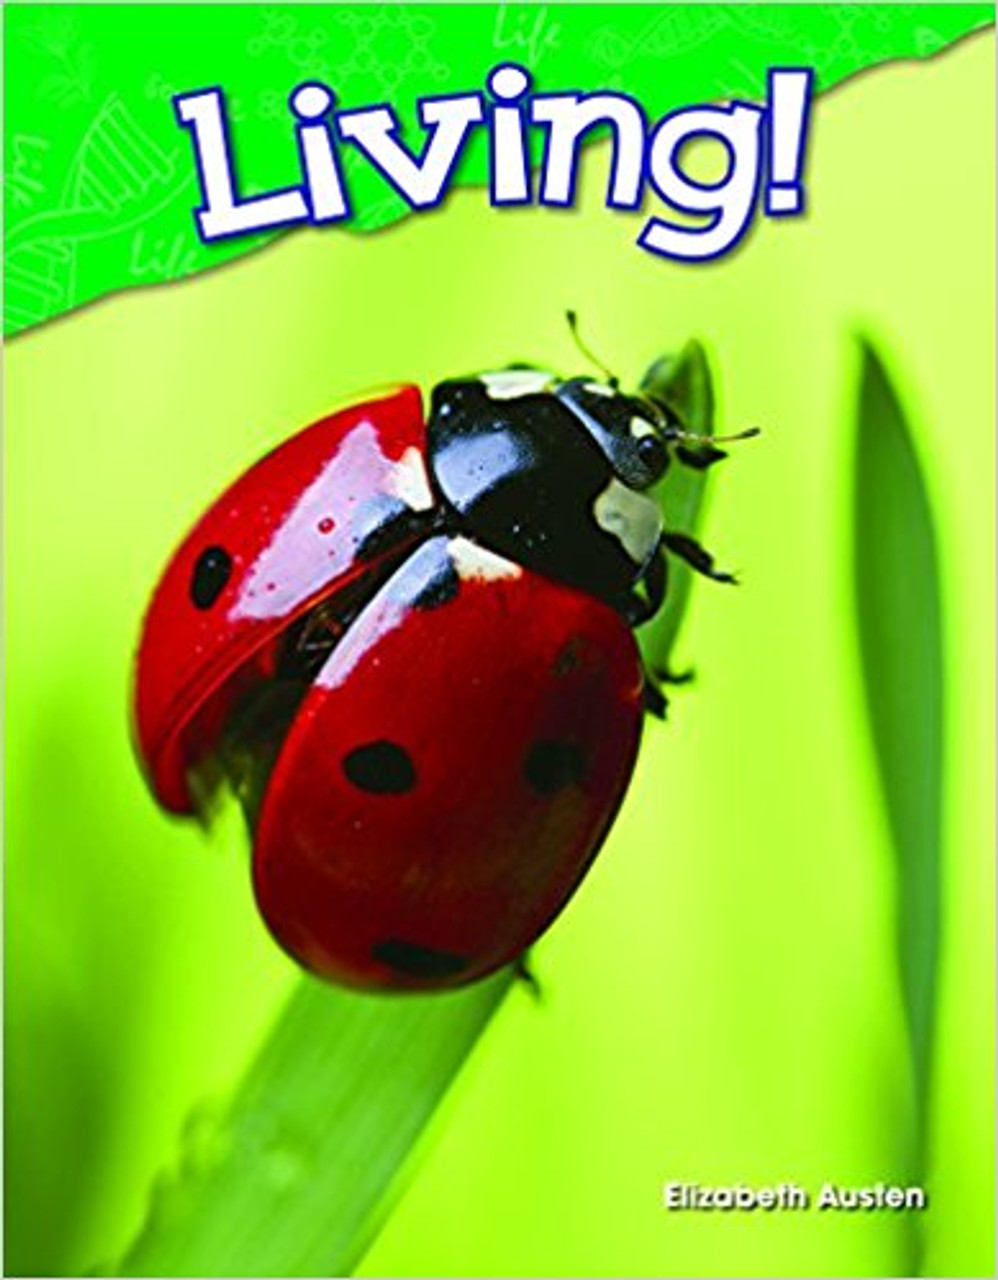 Living! by Elizabeth Austen